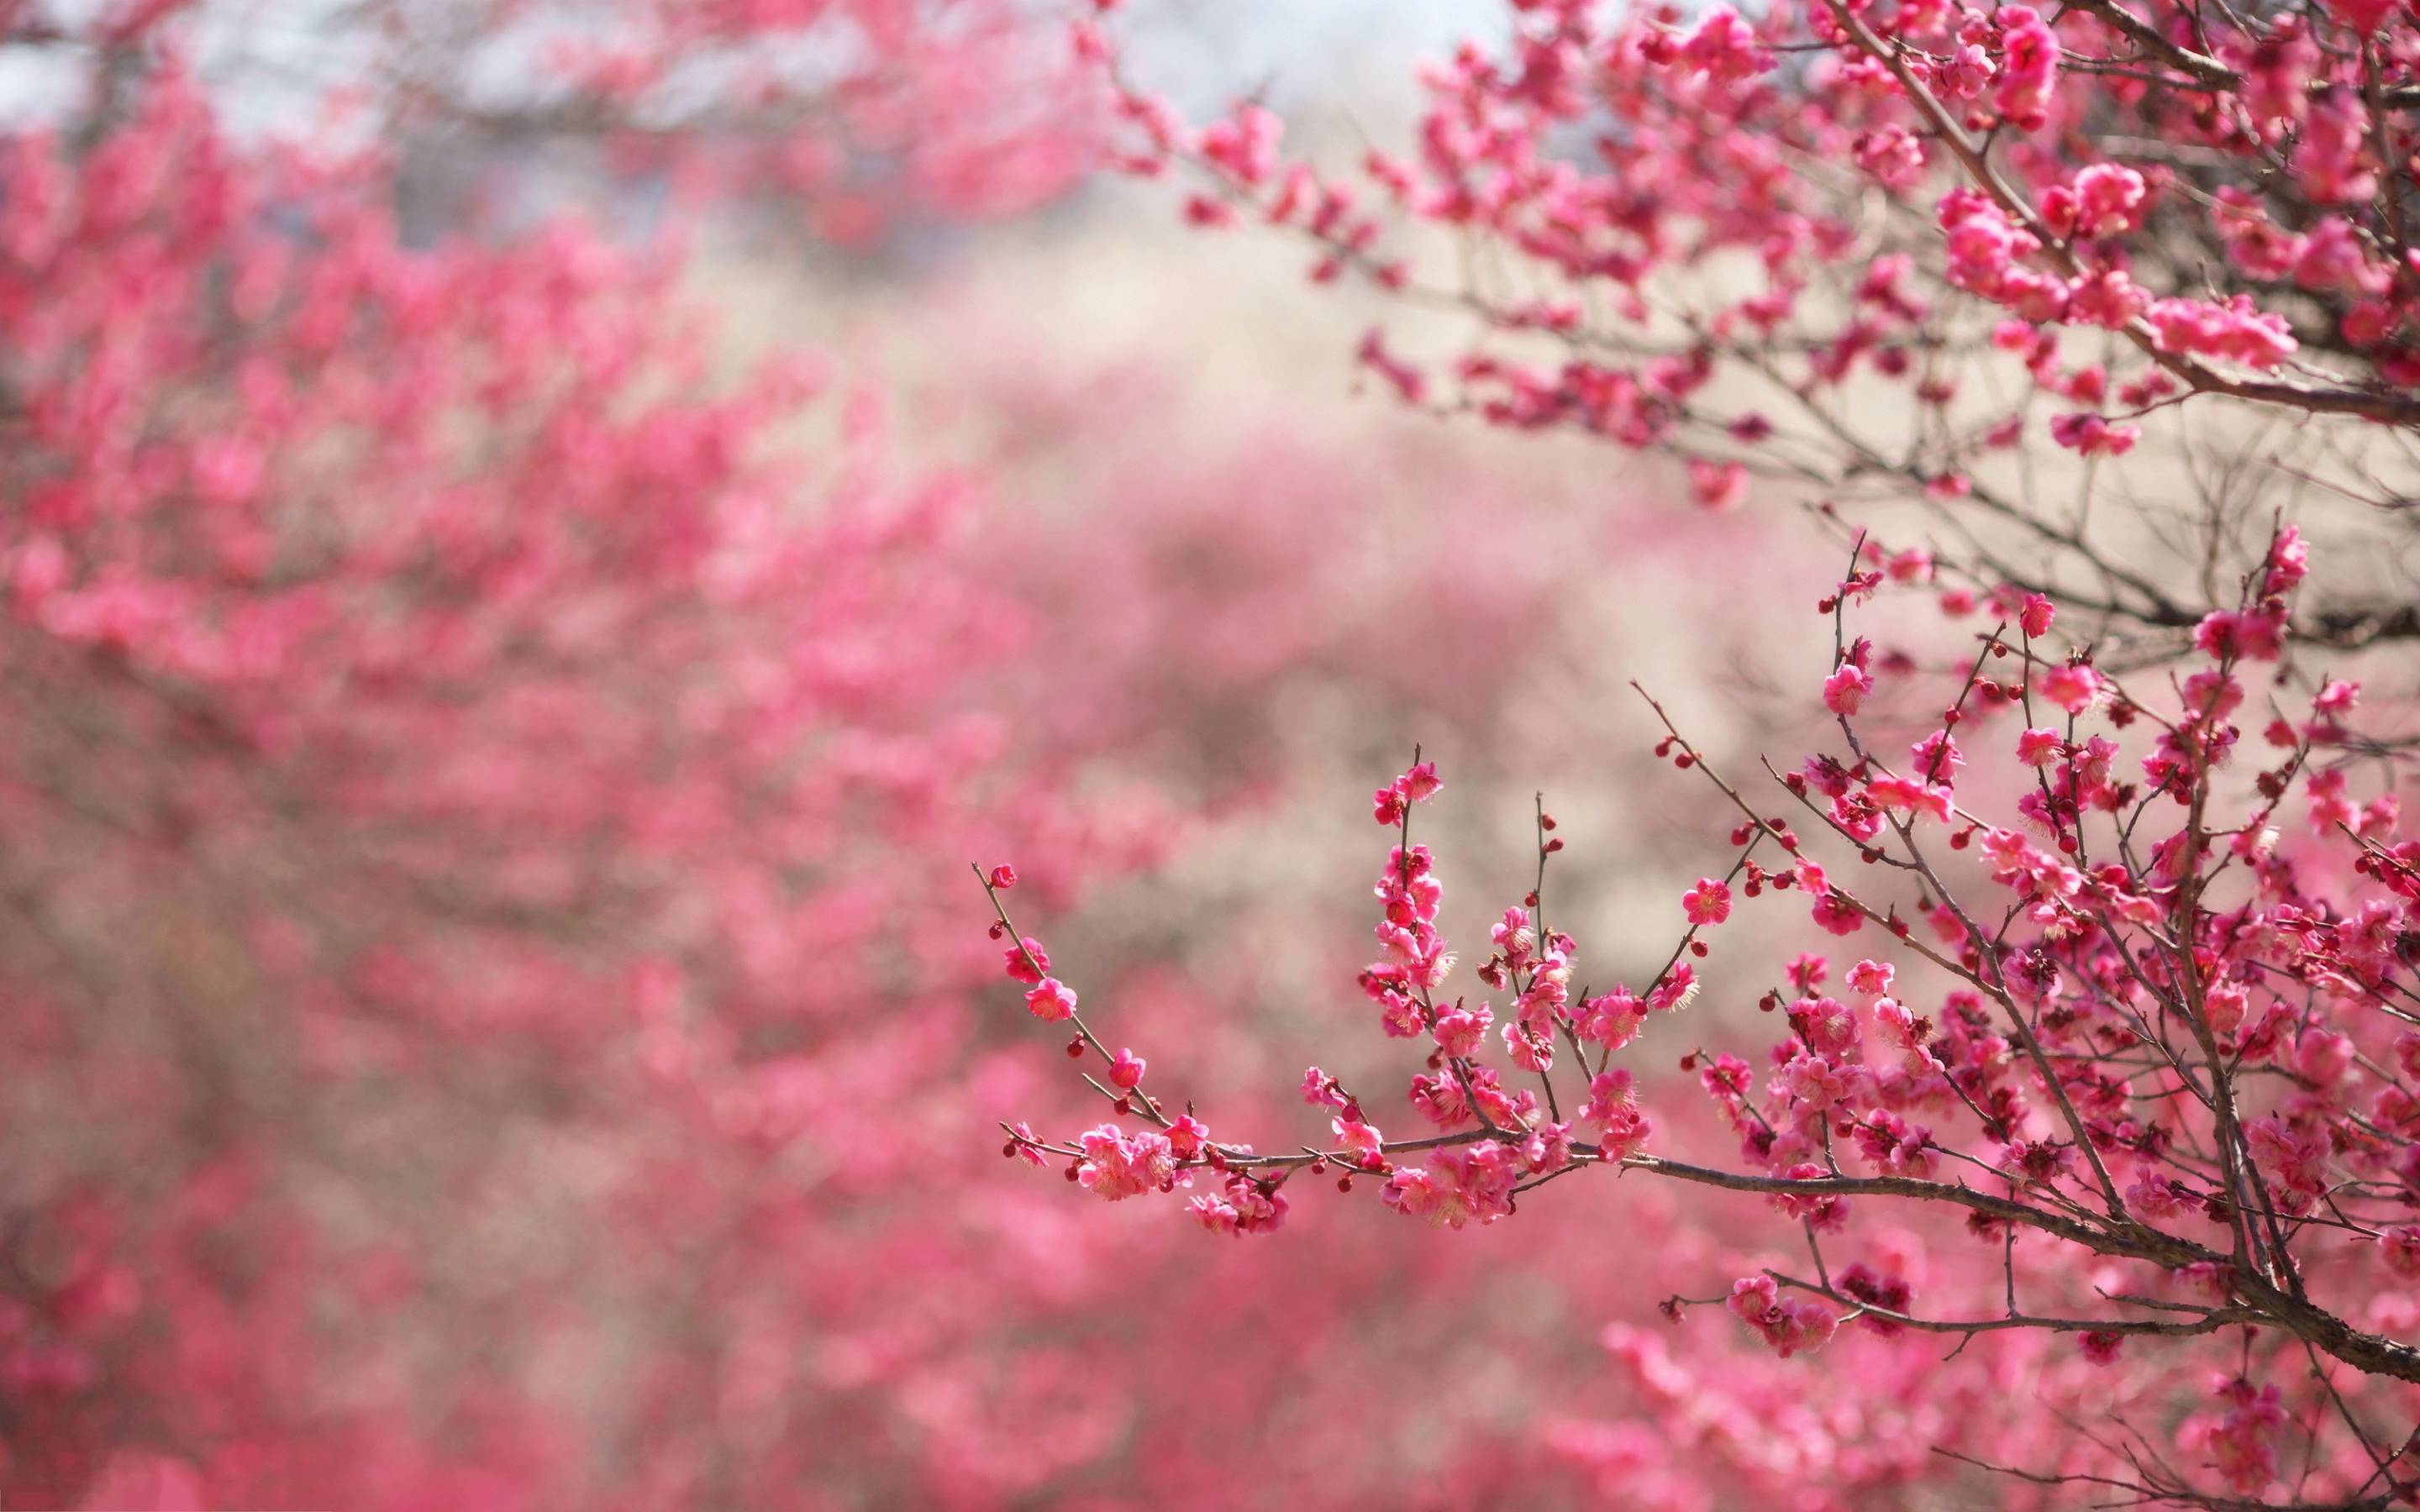 Cherry Blossom Wallpaper. Apple Blossom Wallpaper, Cherry Blossom Wallpaper and Sakura Blossom Wallpaper